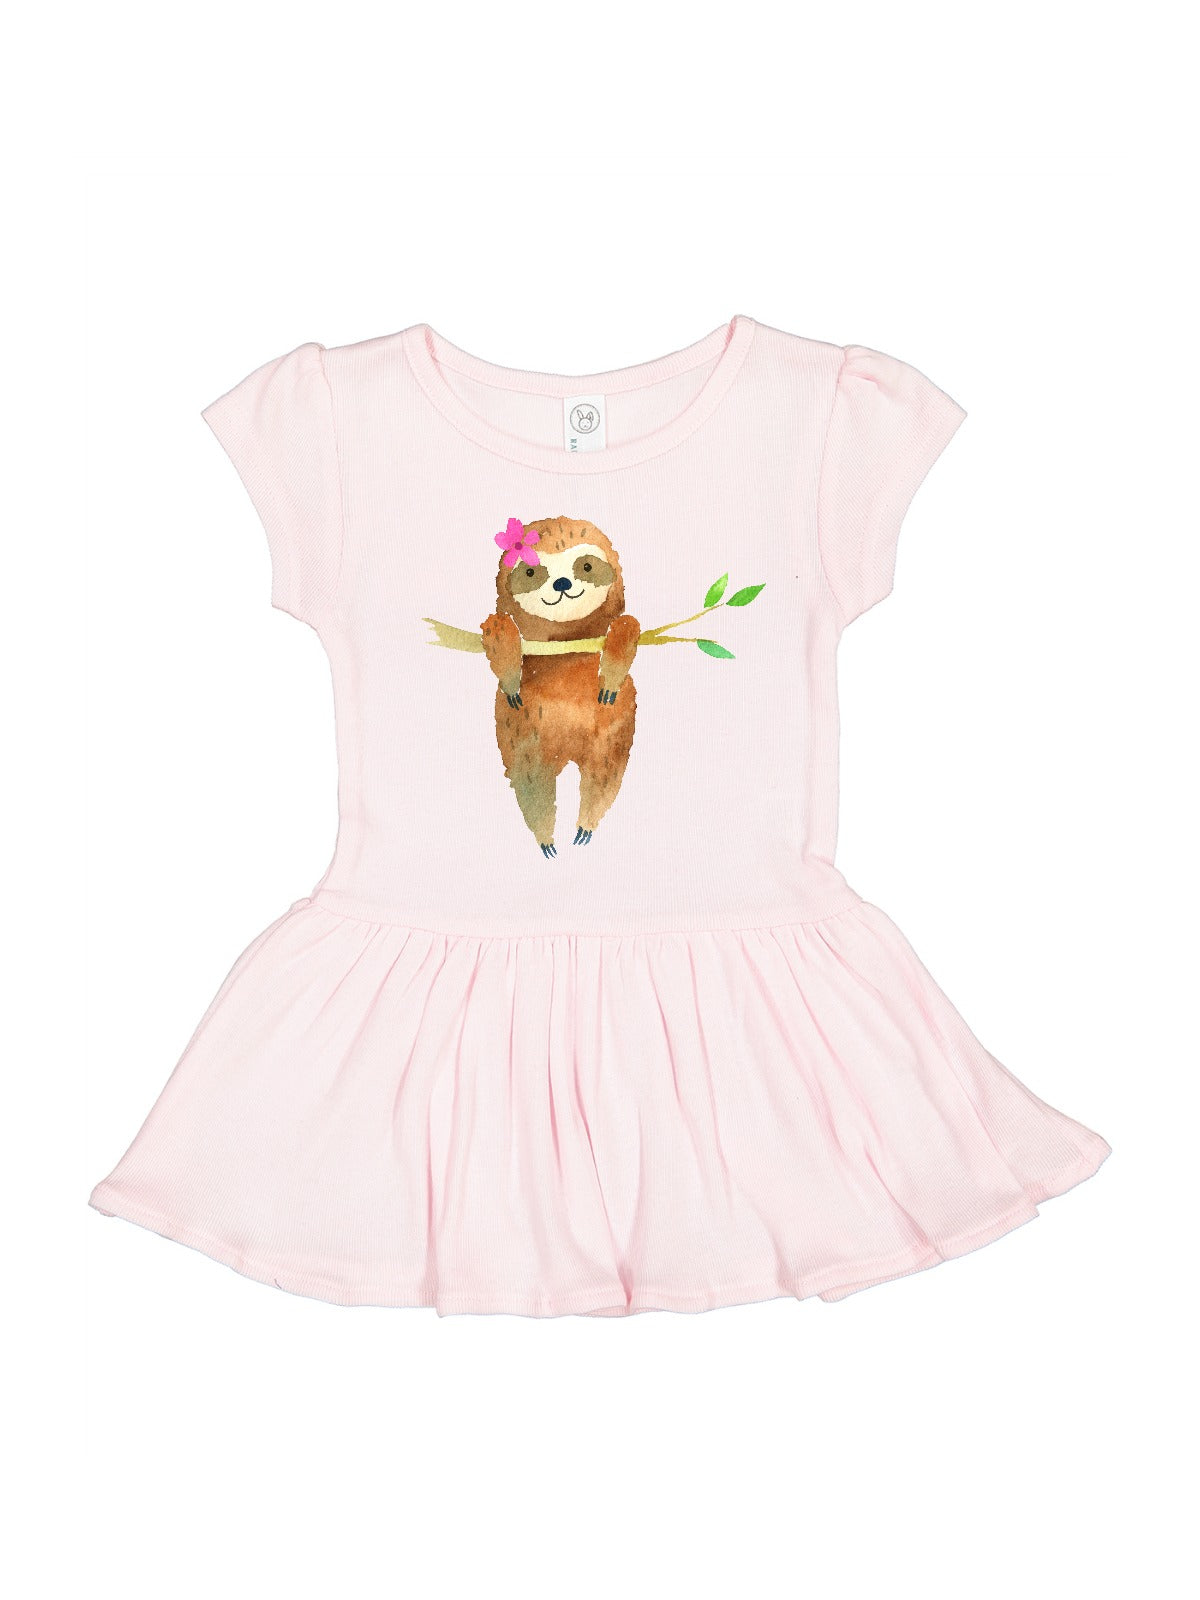 Ballerina pink Sloth dress for baby girls, toddler girls, and big girls